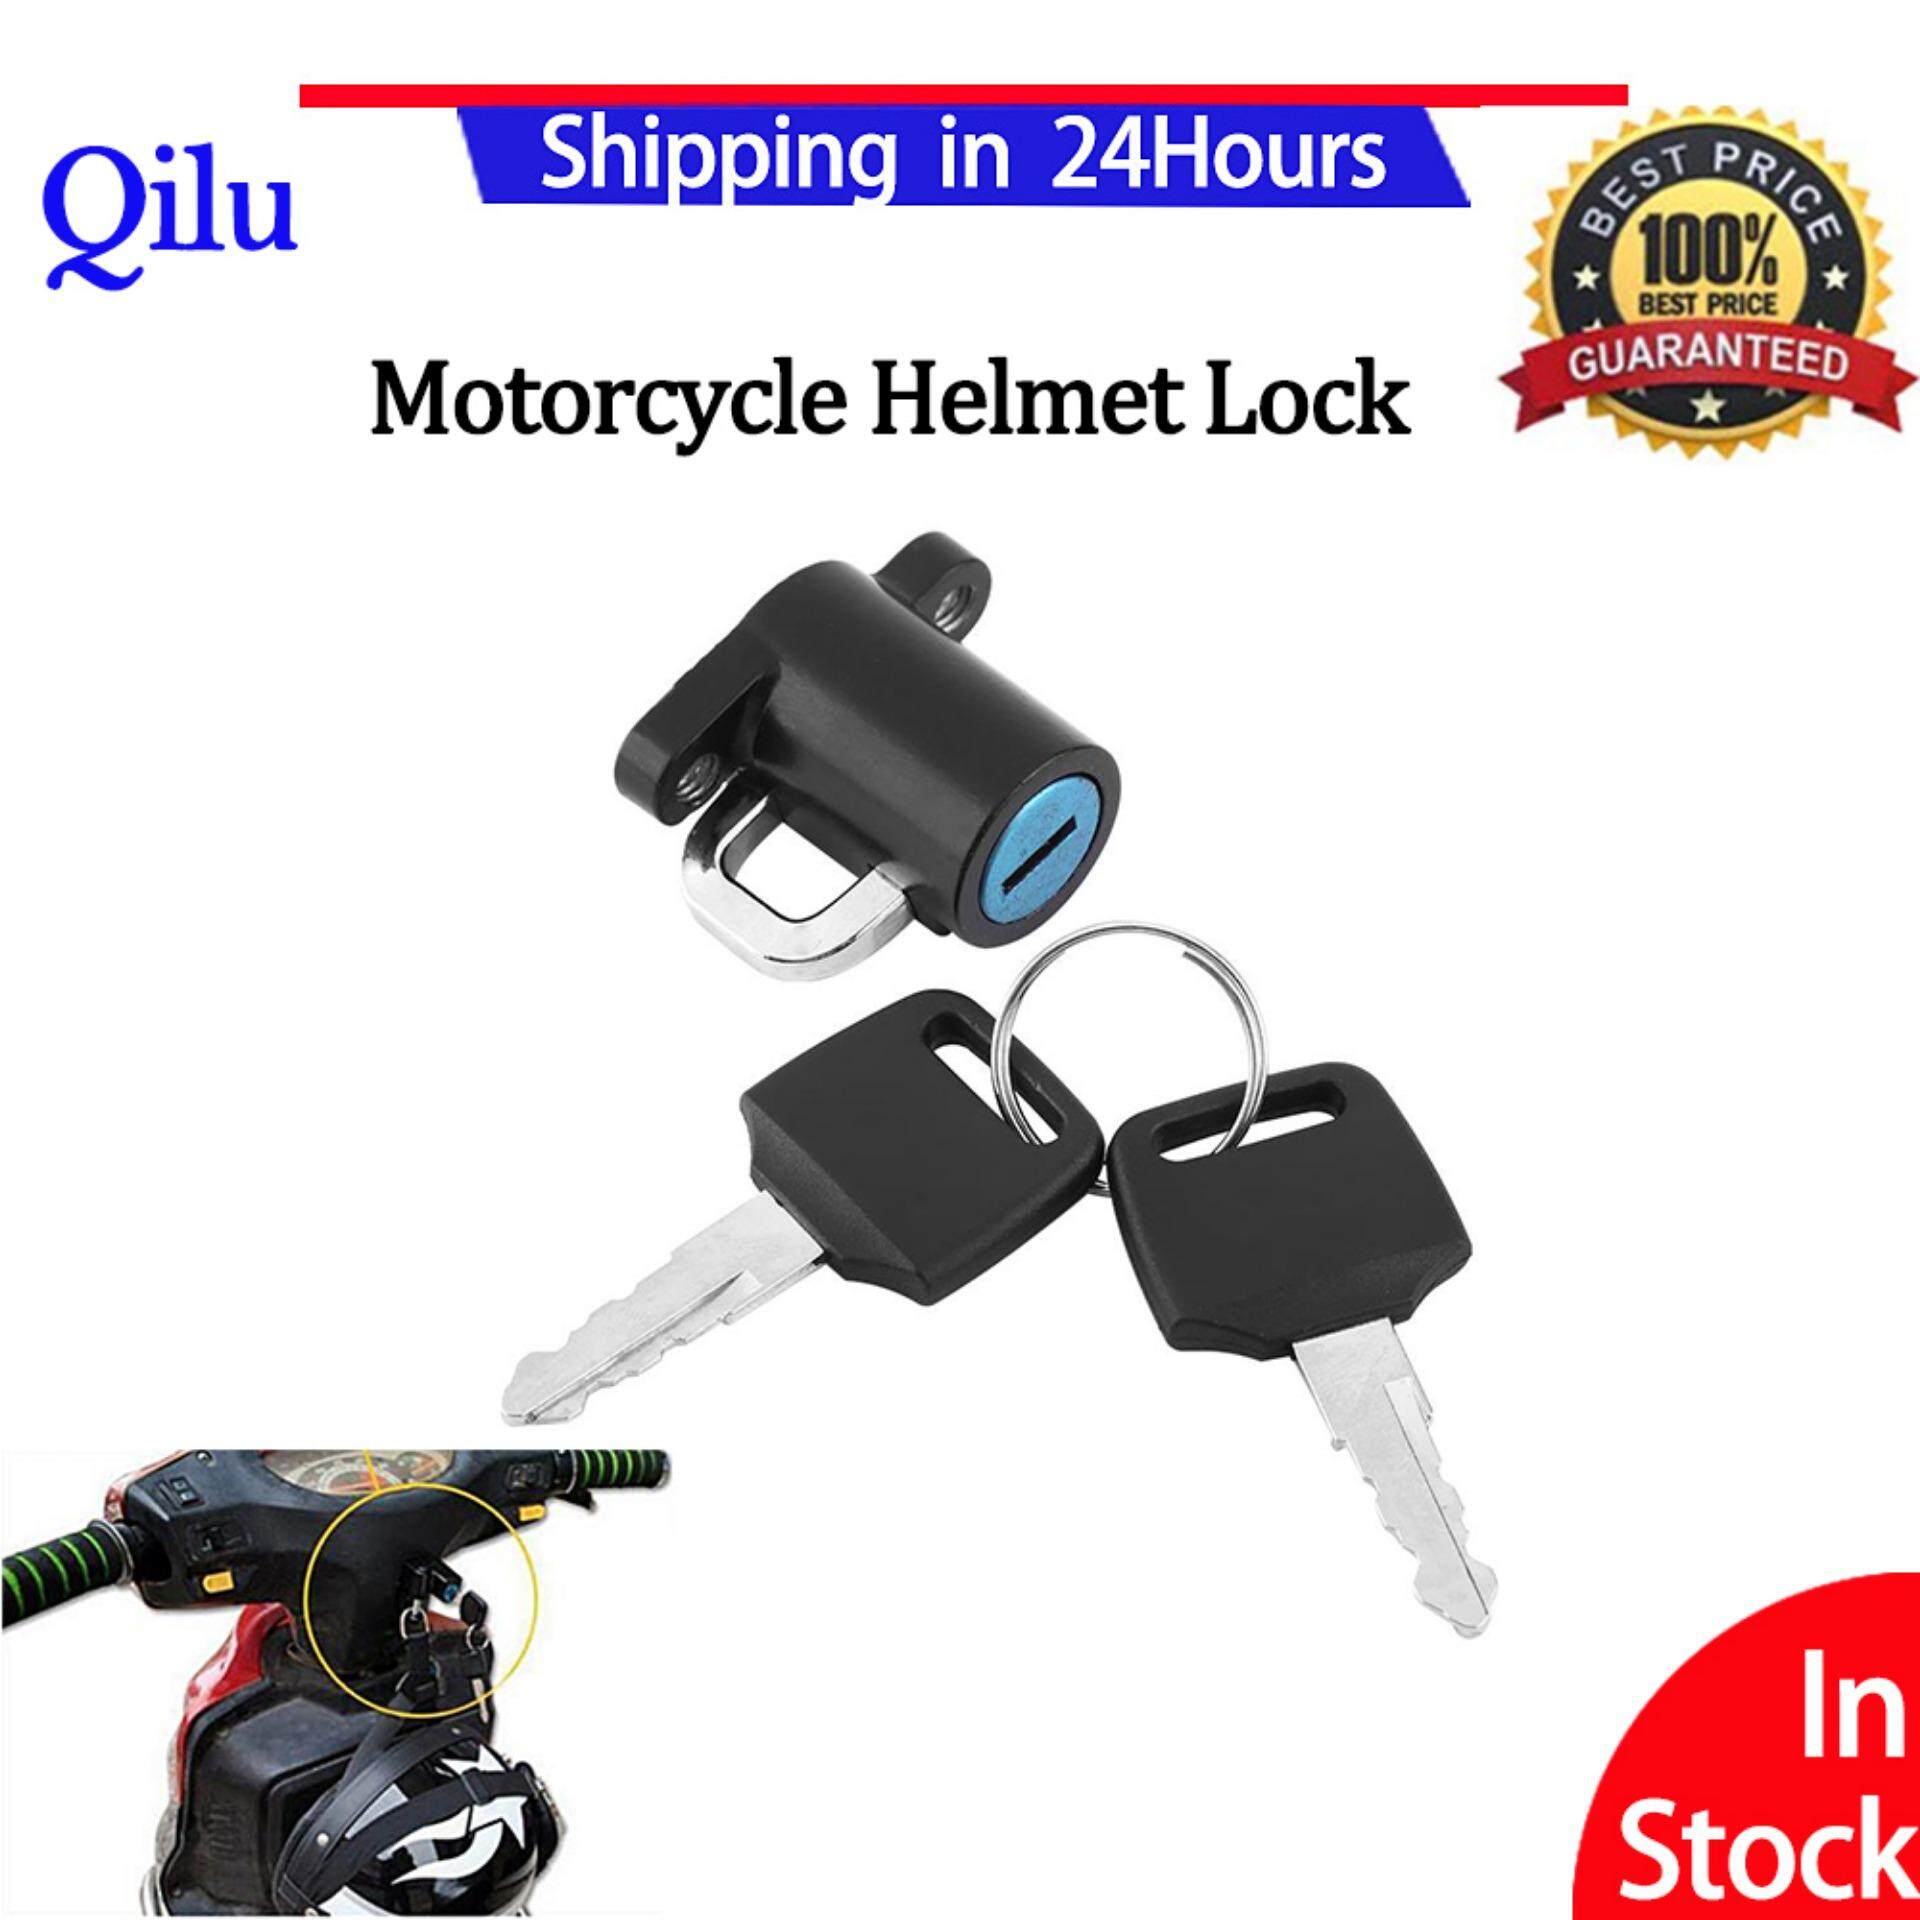 bike helmet lock price